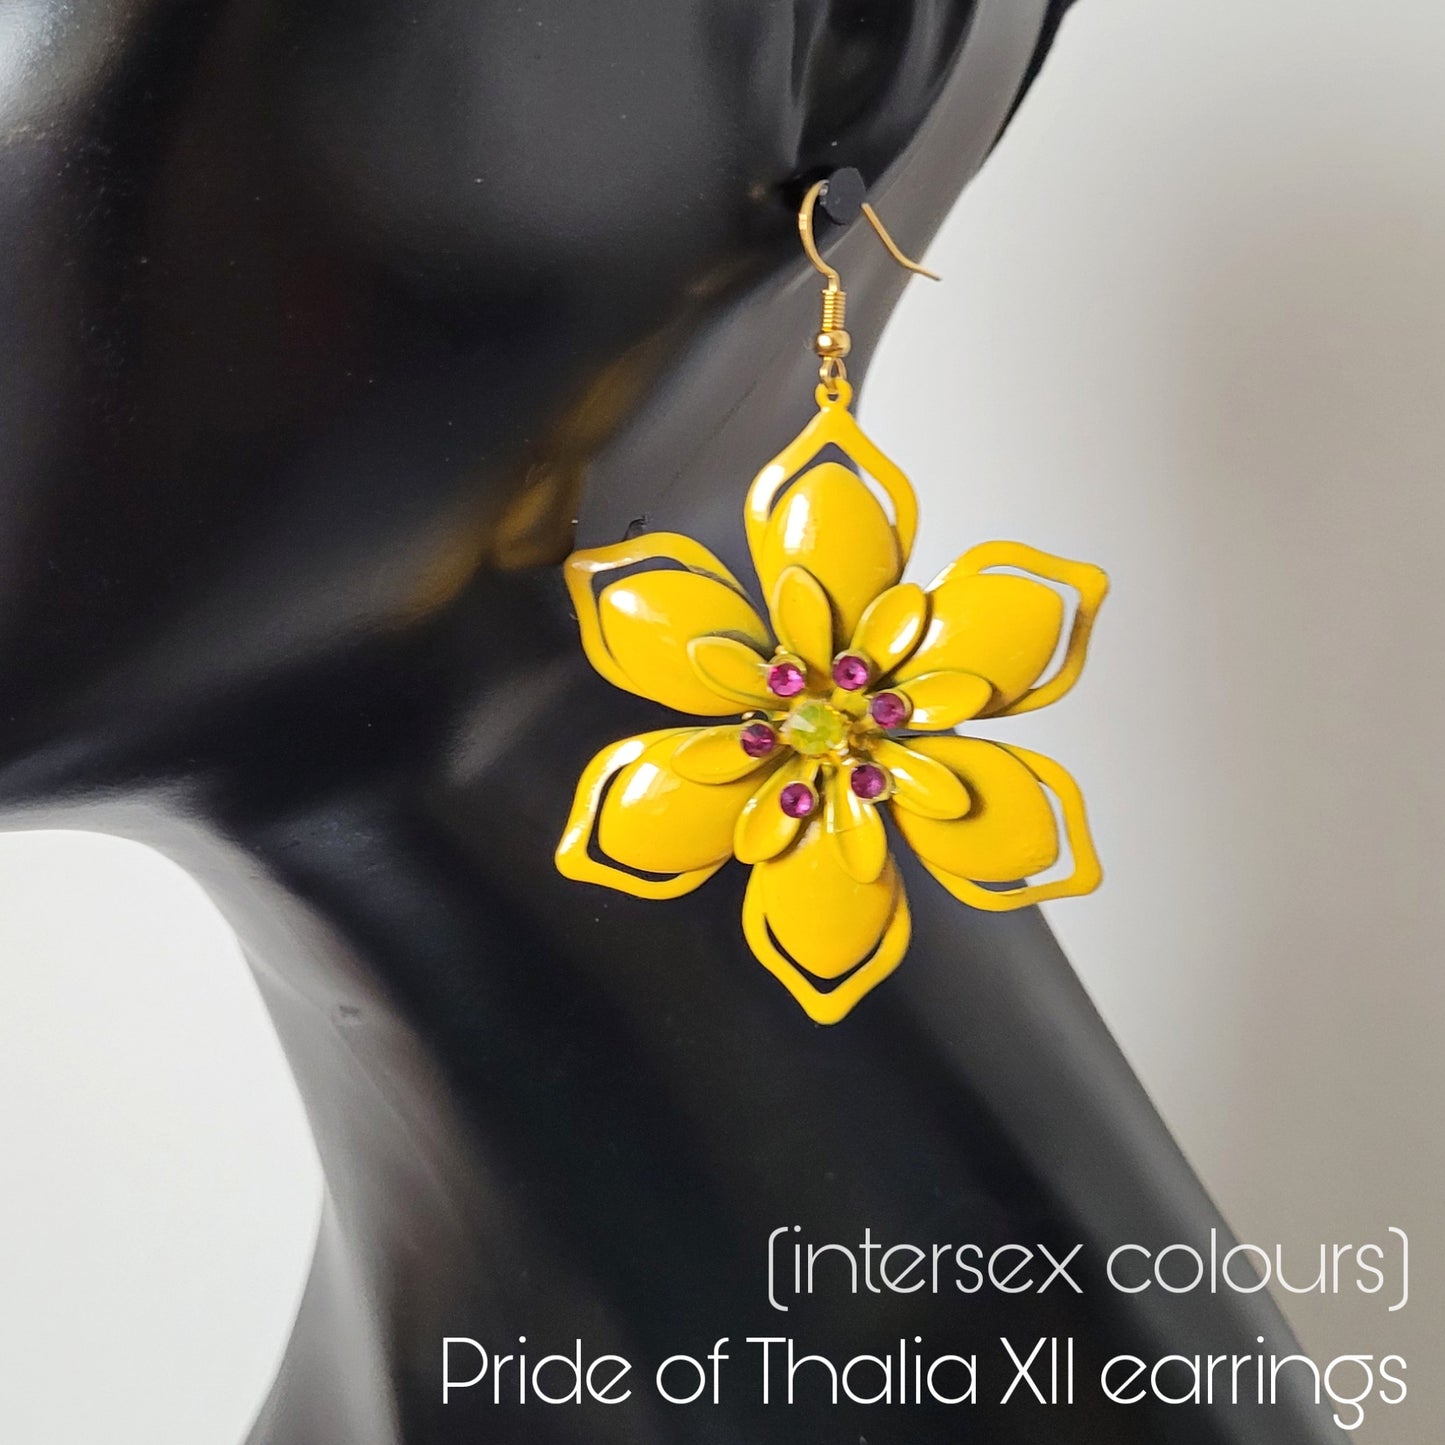 Deusa ex Machina collection: The Pride of Thalia earrings